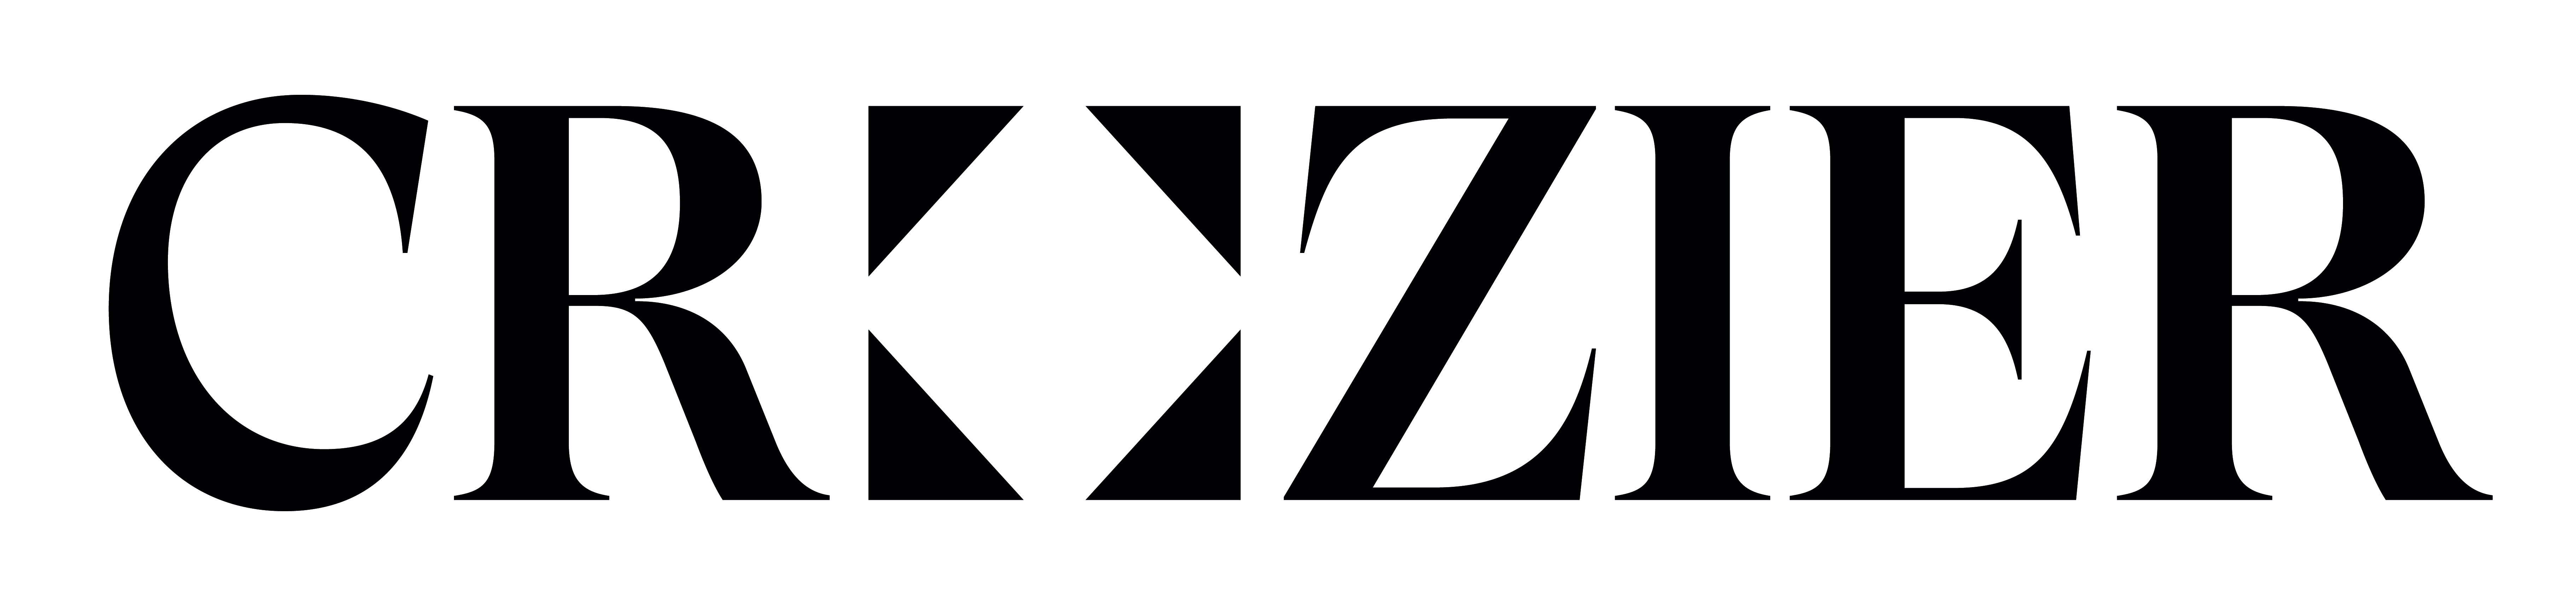 Crozier logo